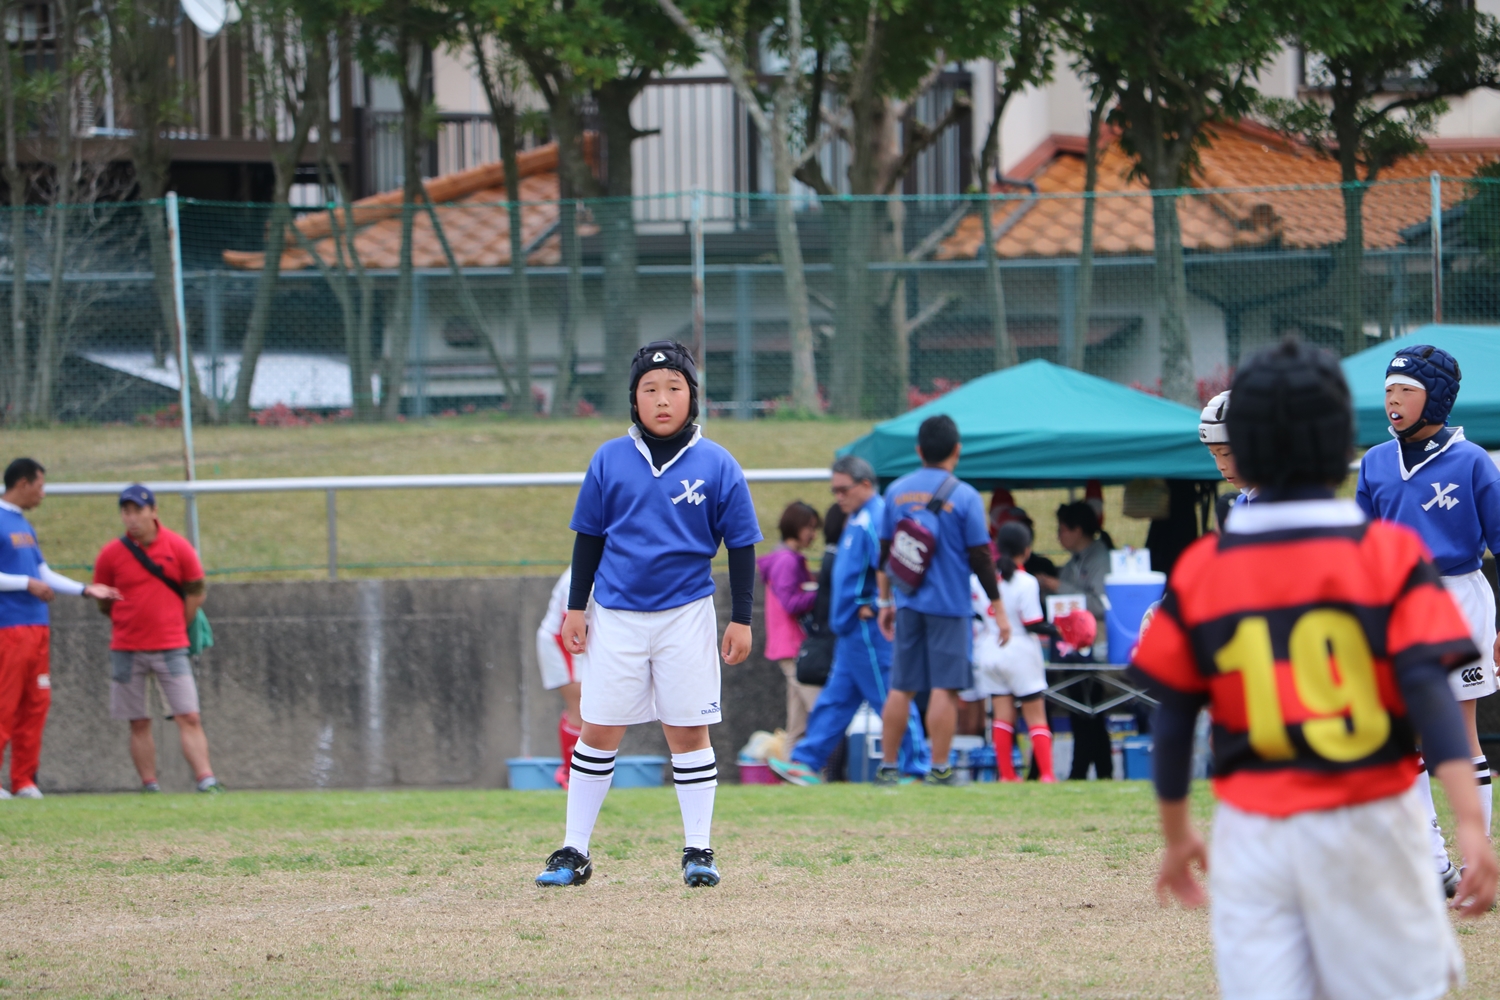 youngwave_kitakyusyu_rugby_school_kasugahai2016023.JPG